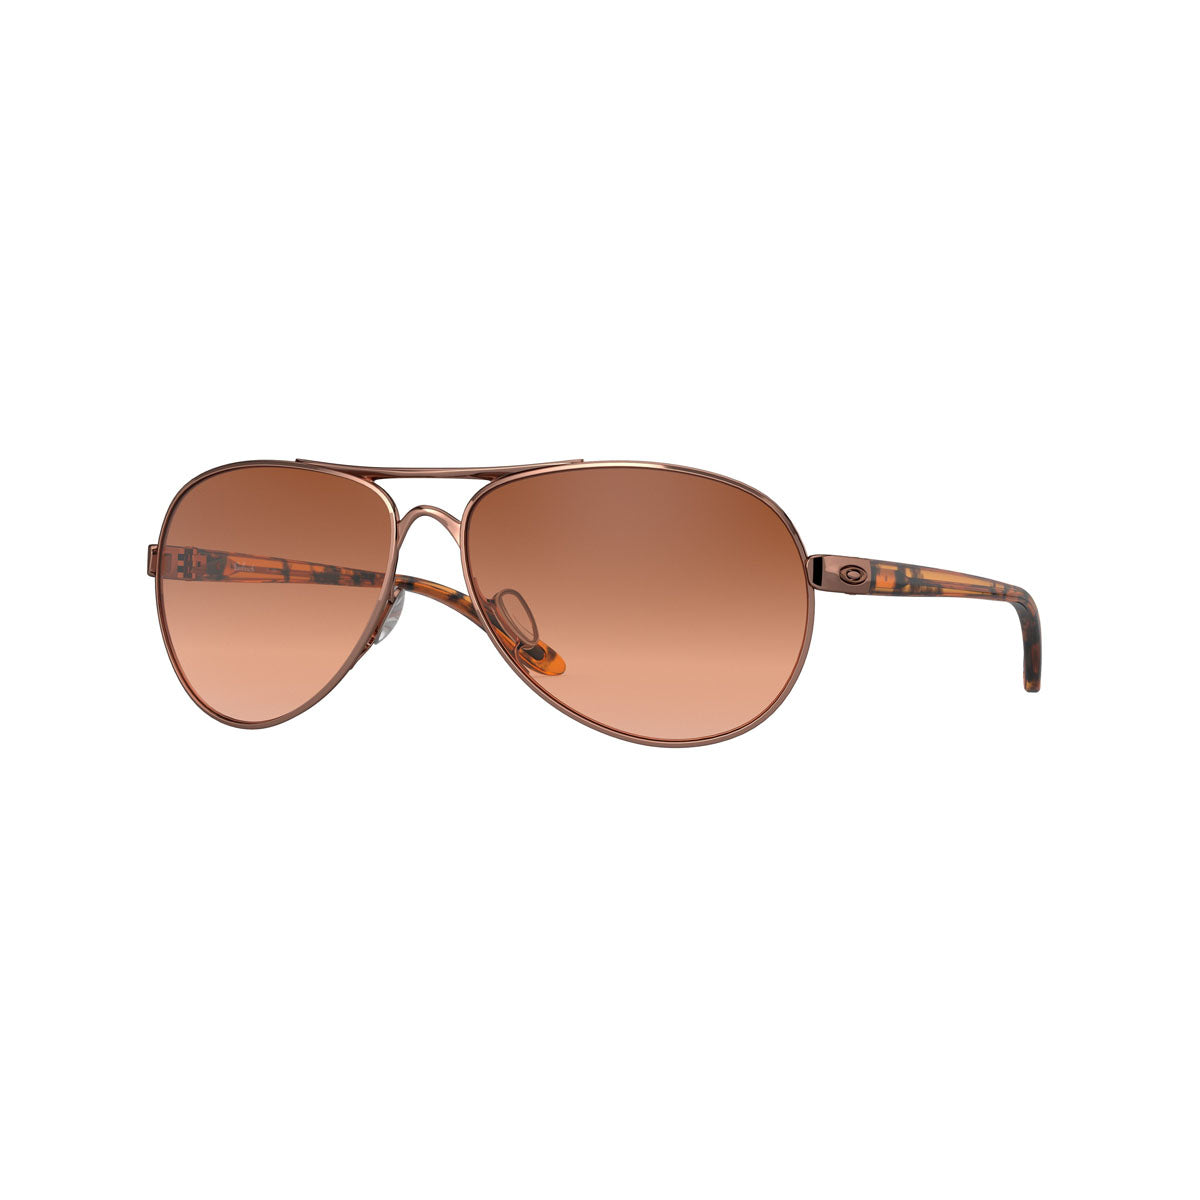 Oakley Womens Feedback Sunglasses - Rose Gold/VR50 Brown Gradient